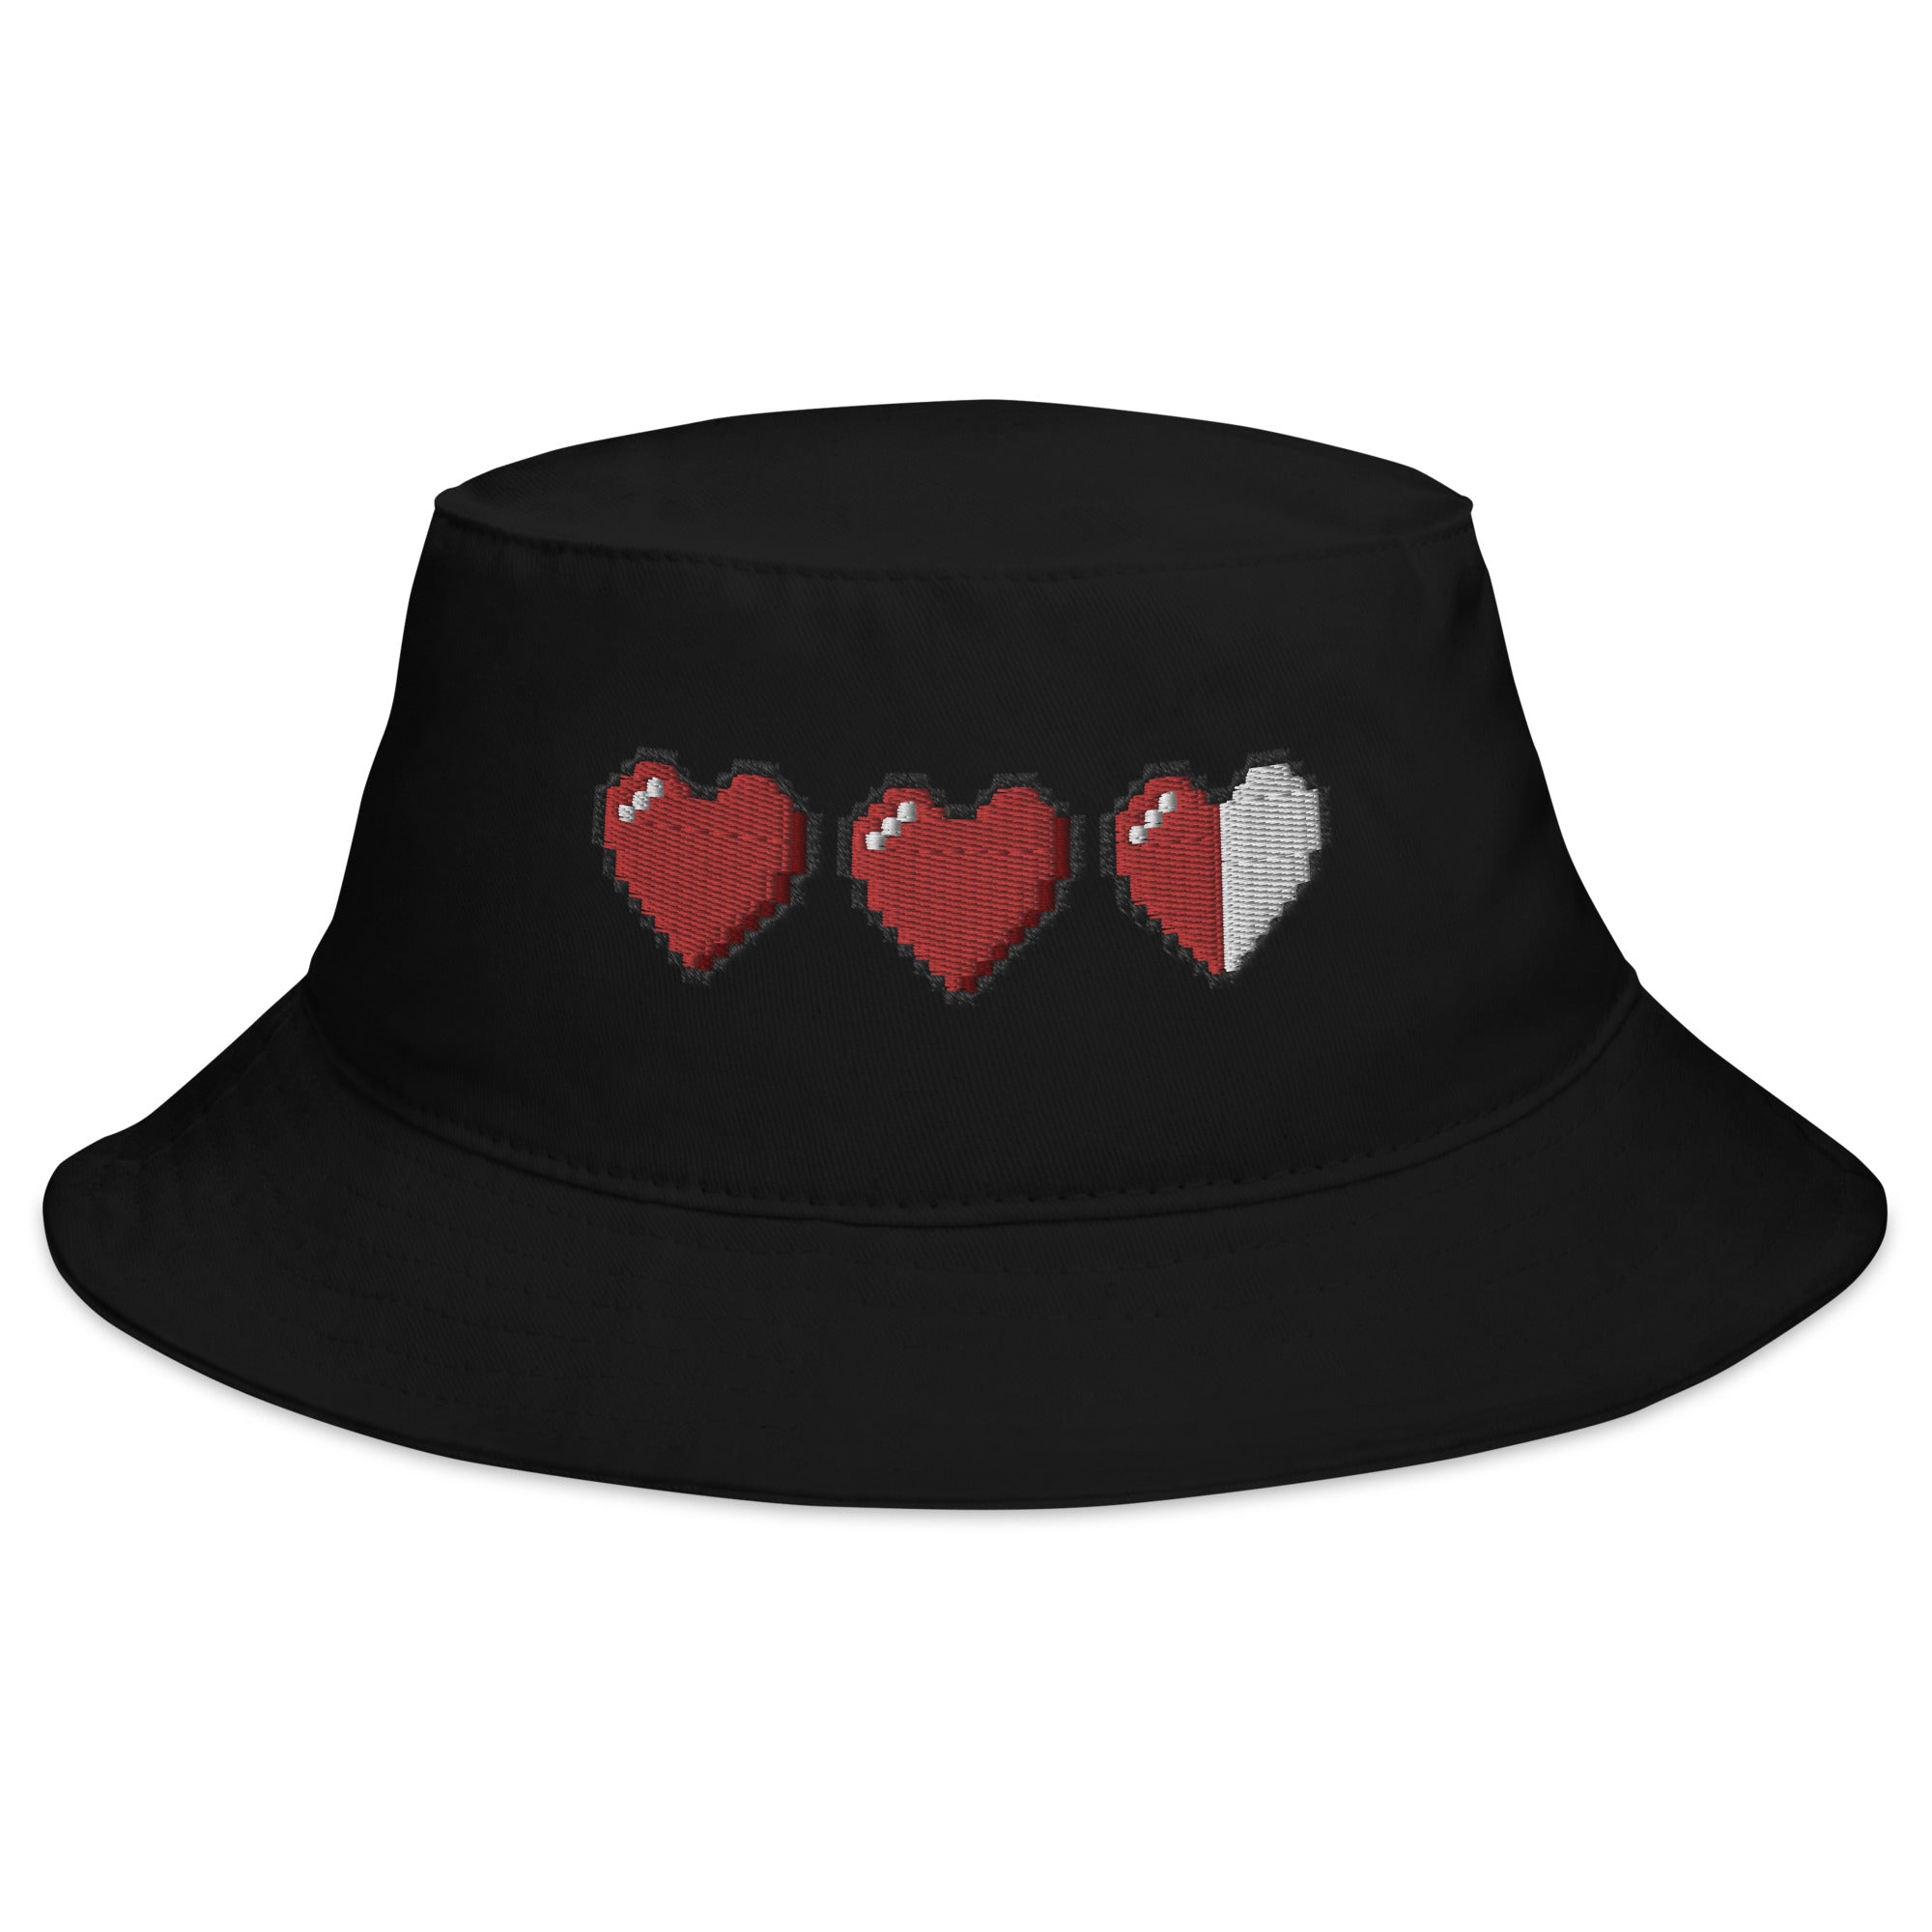 3 Heart Meter Retro 8 Bit Video Game Pixelated Embroidered Bucket Hat